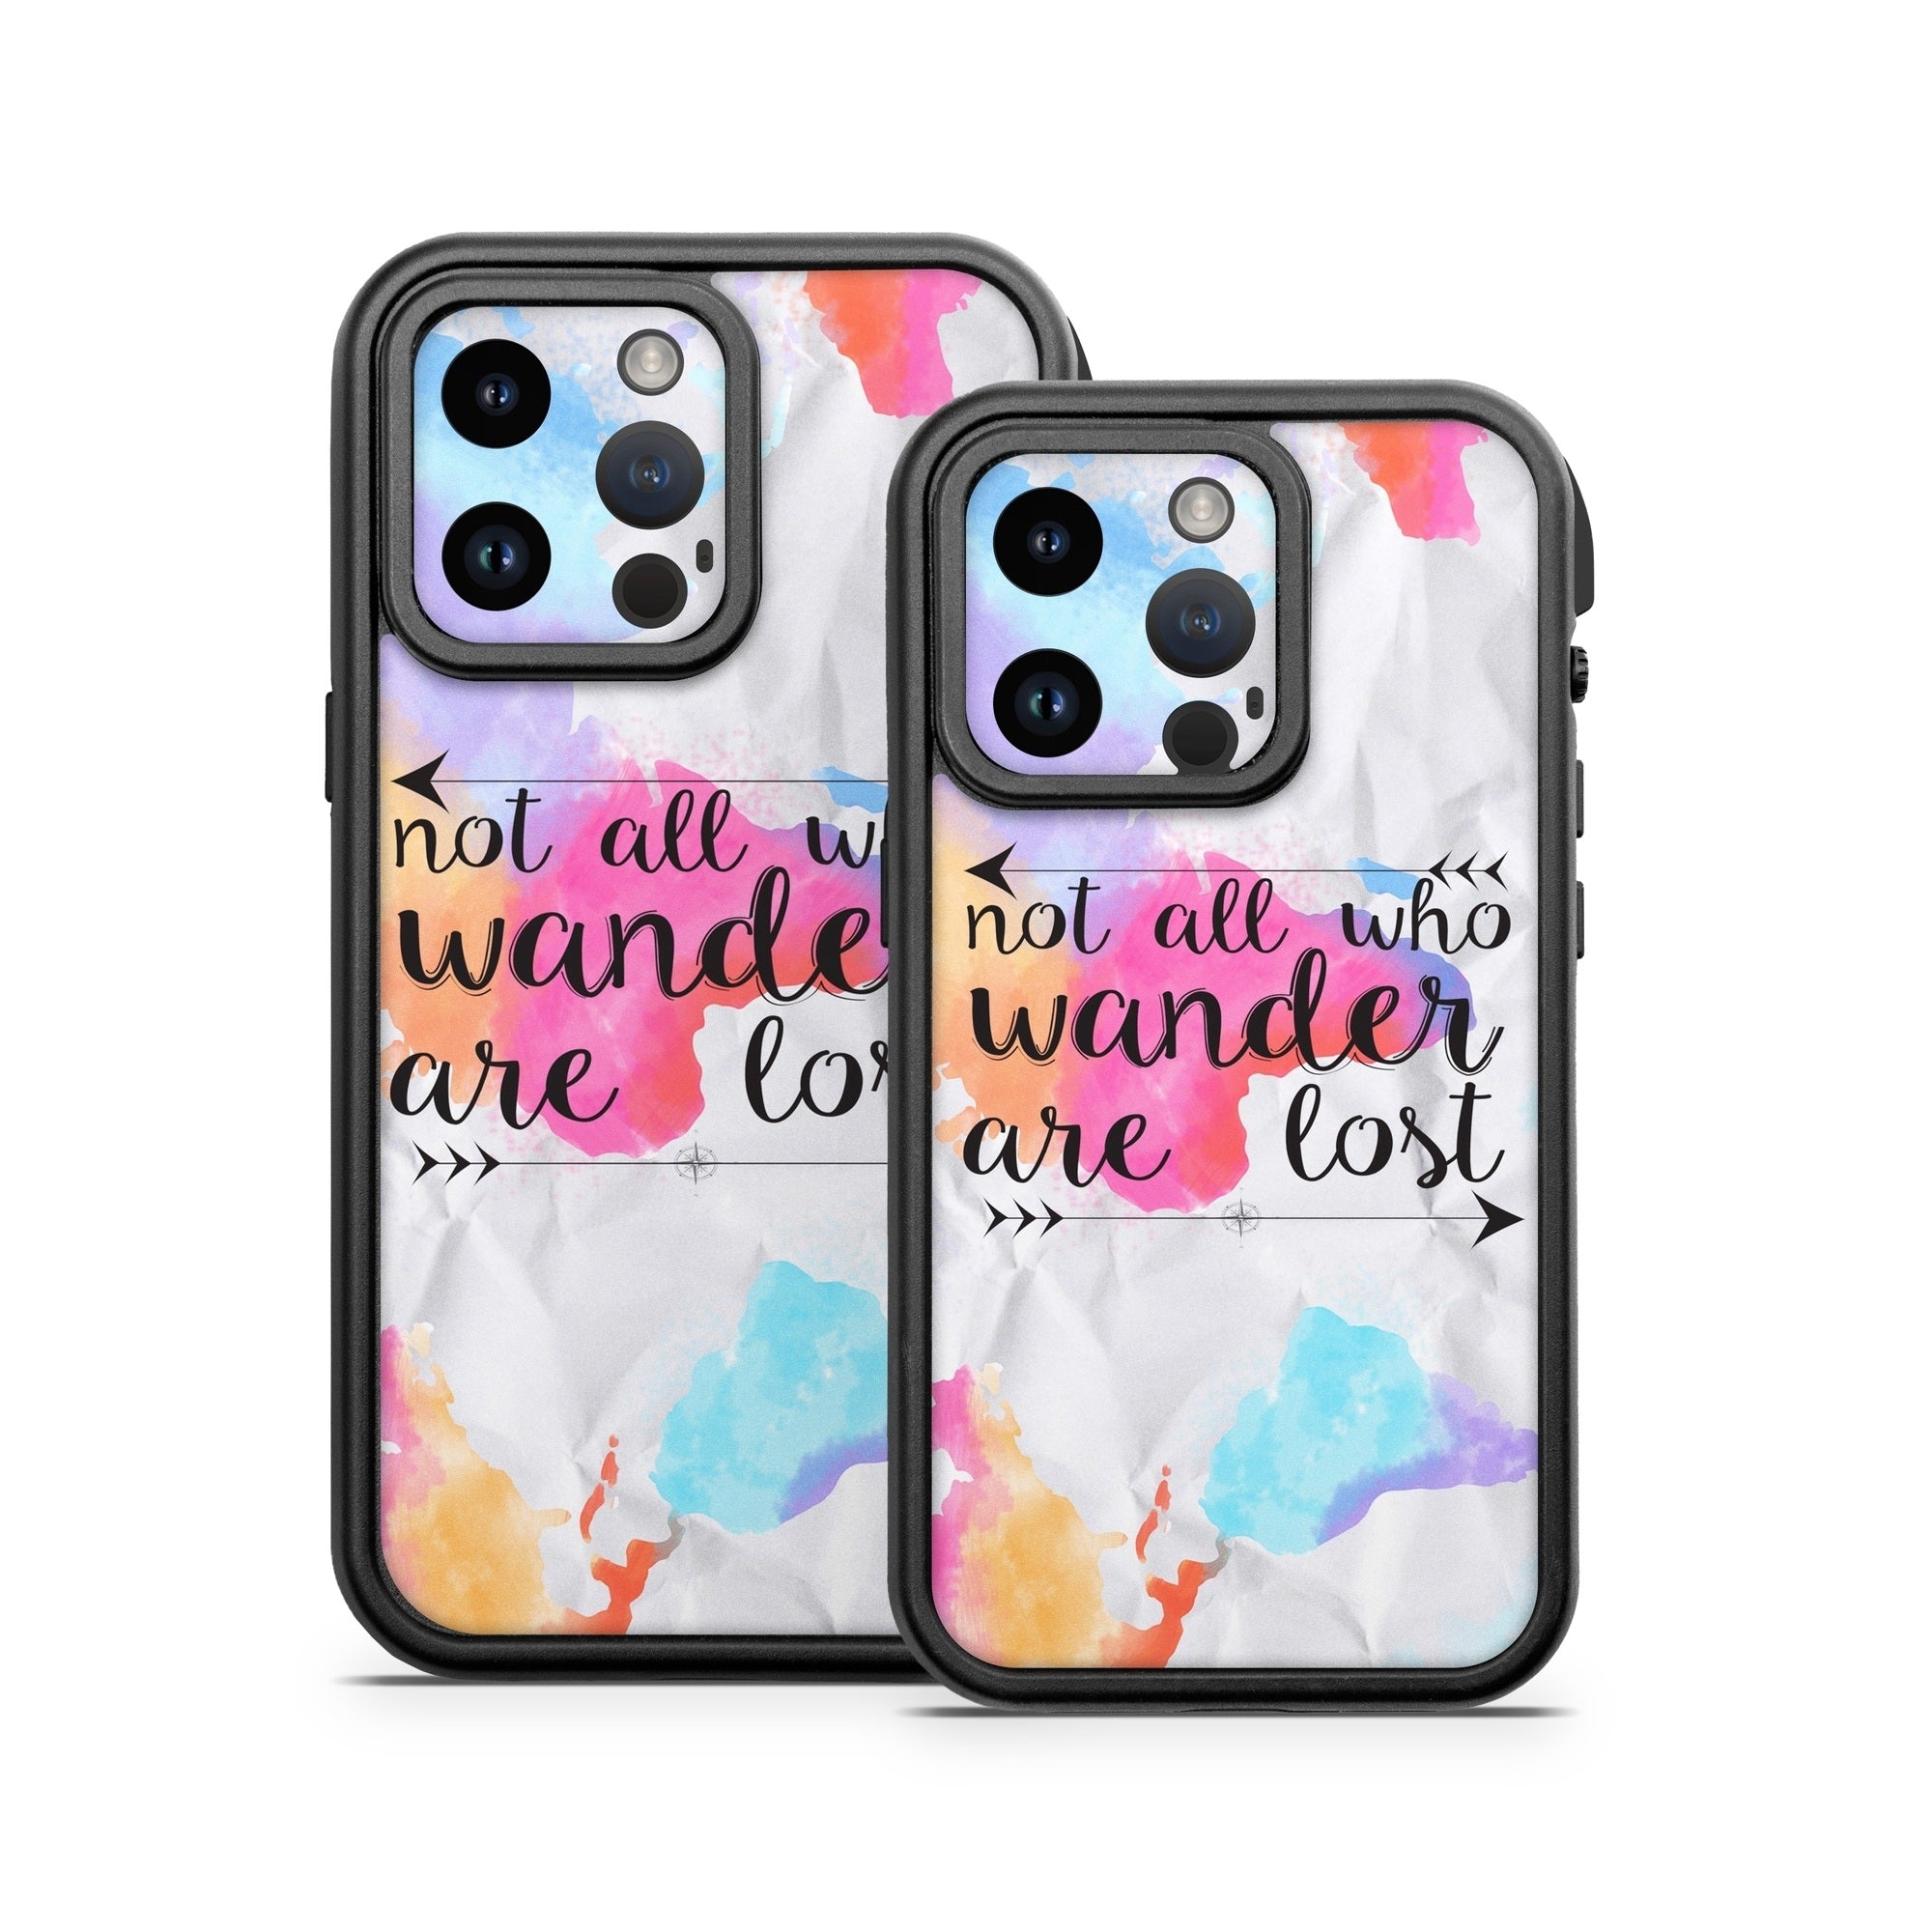 Wander - Otterbox Fre iPhone 14 Case Skin